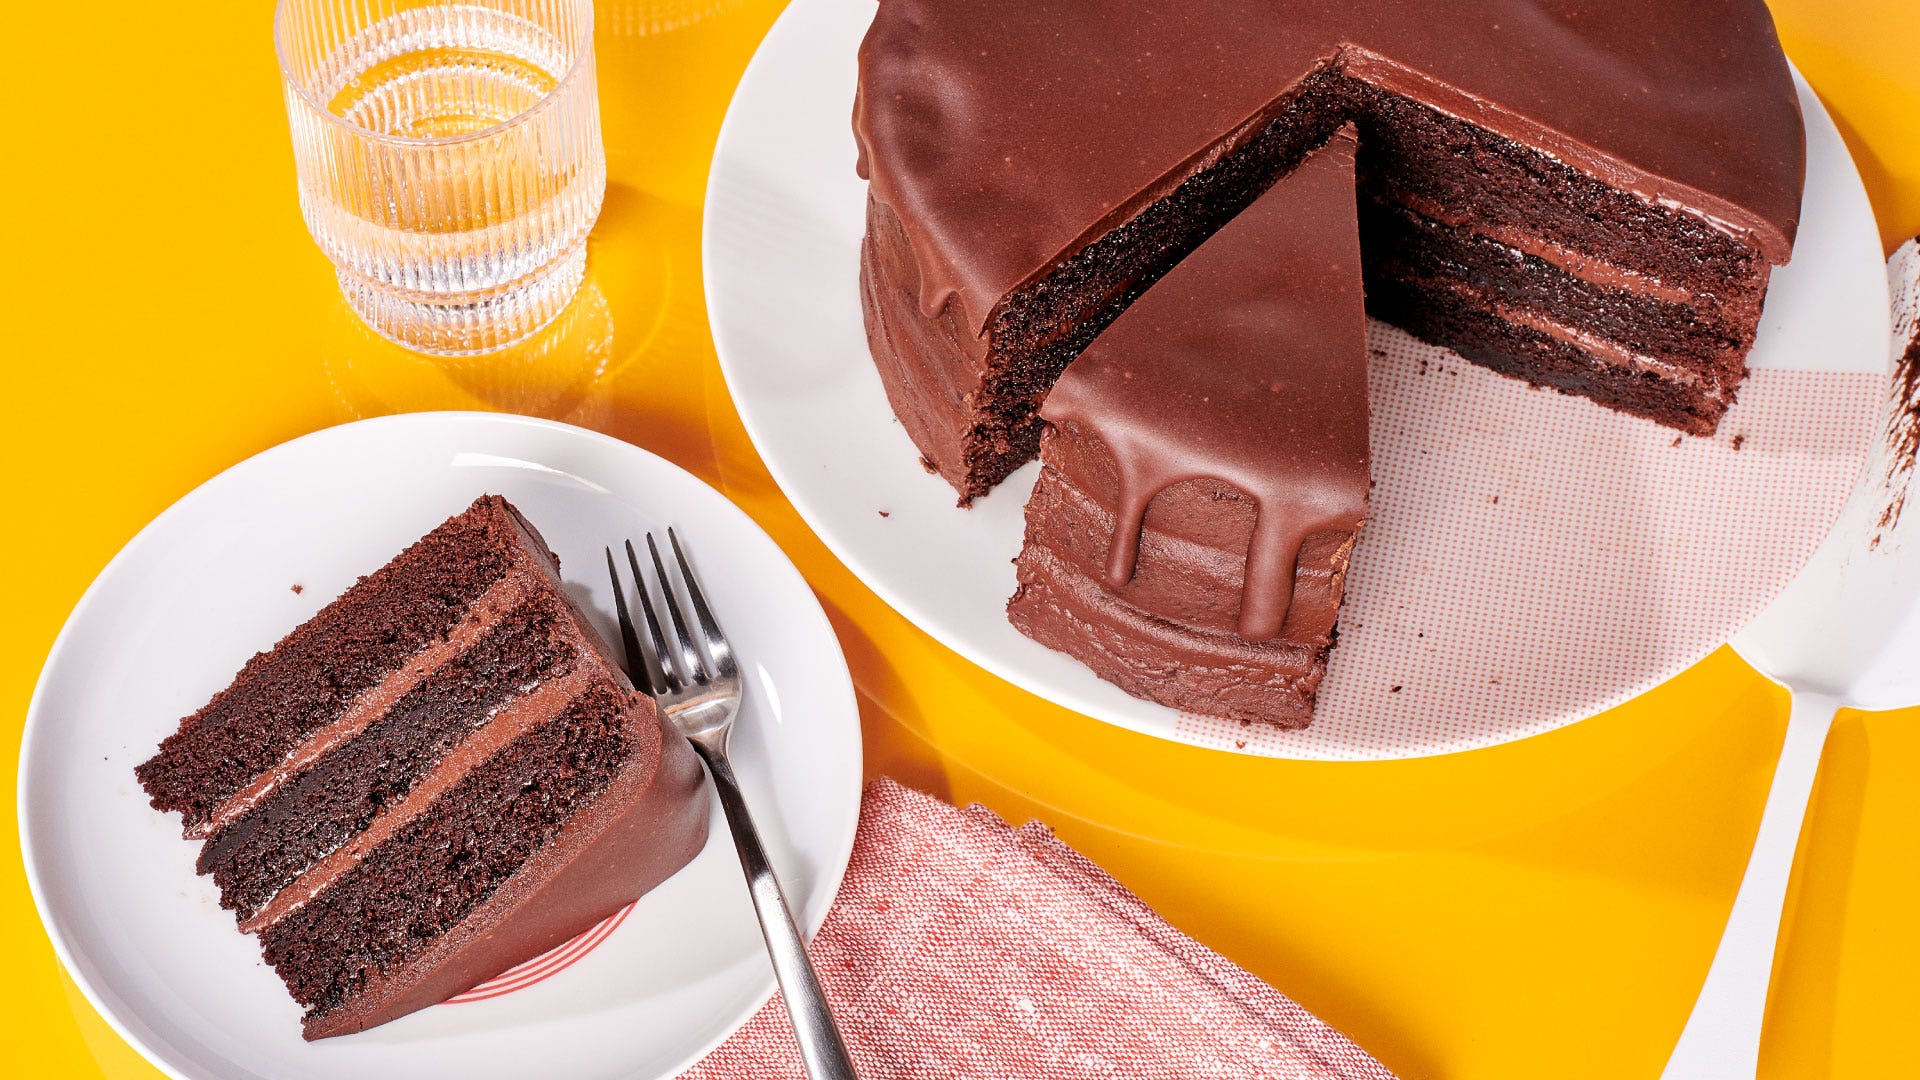 hershey’s perfectly chocolate chocolate cake